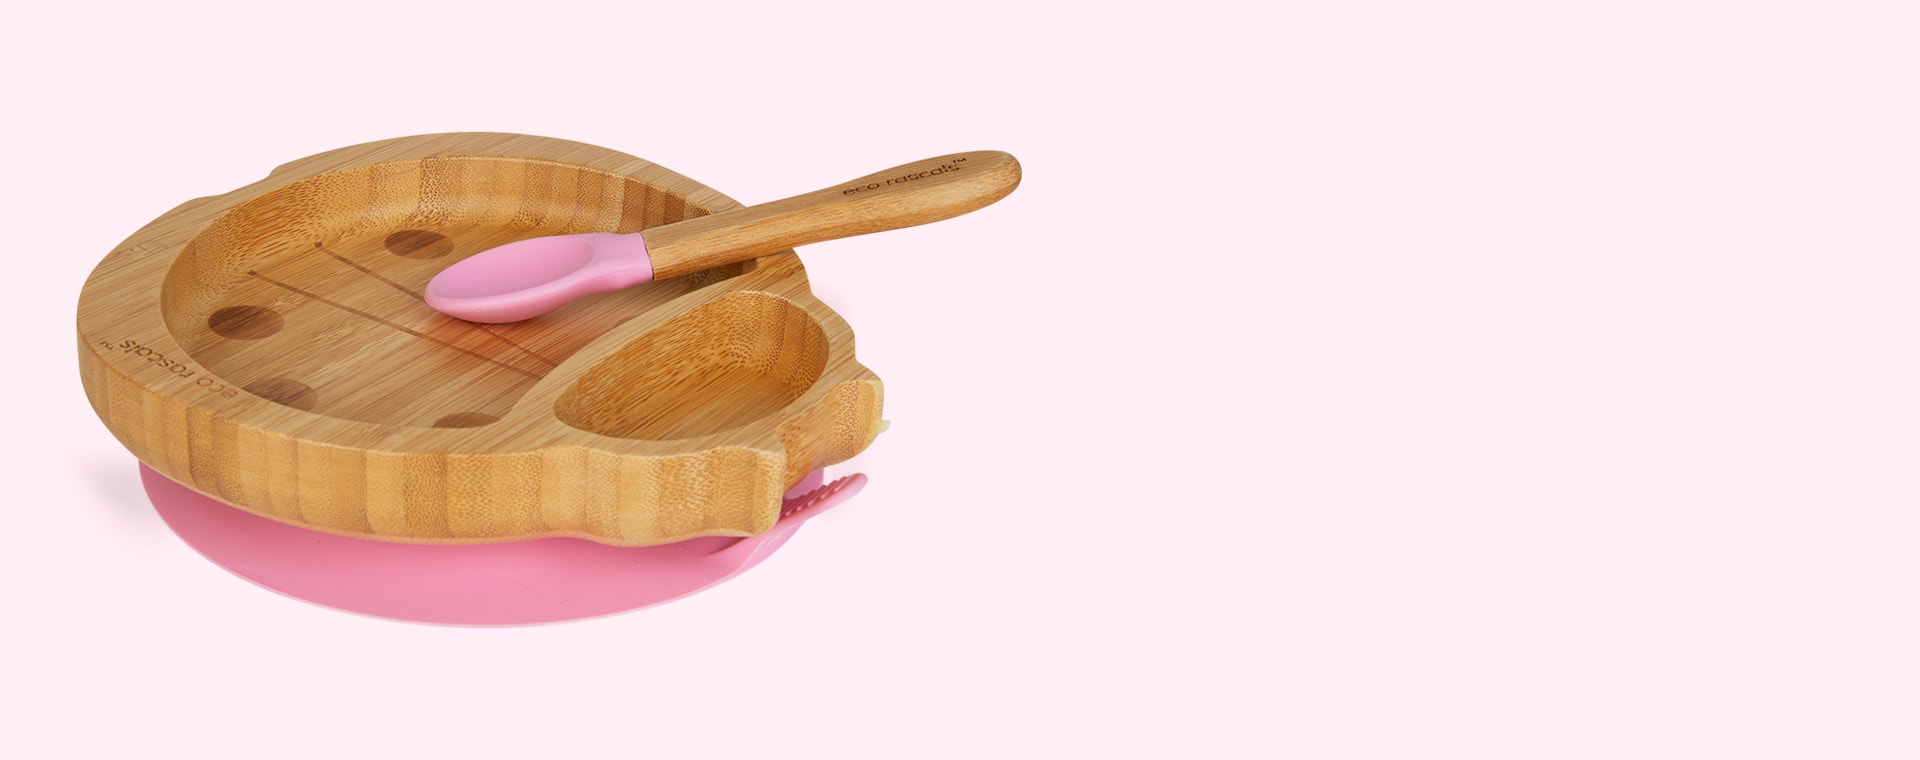 Pink eco rascals Bamboo Suction Ladybird Tableware Set